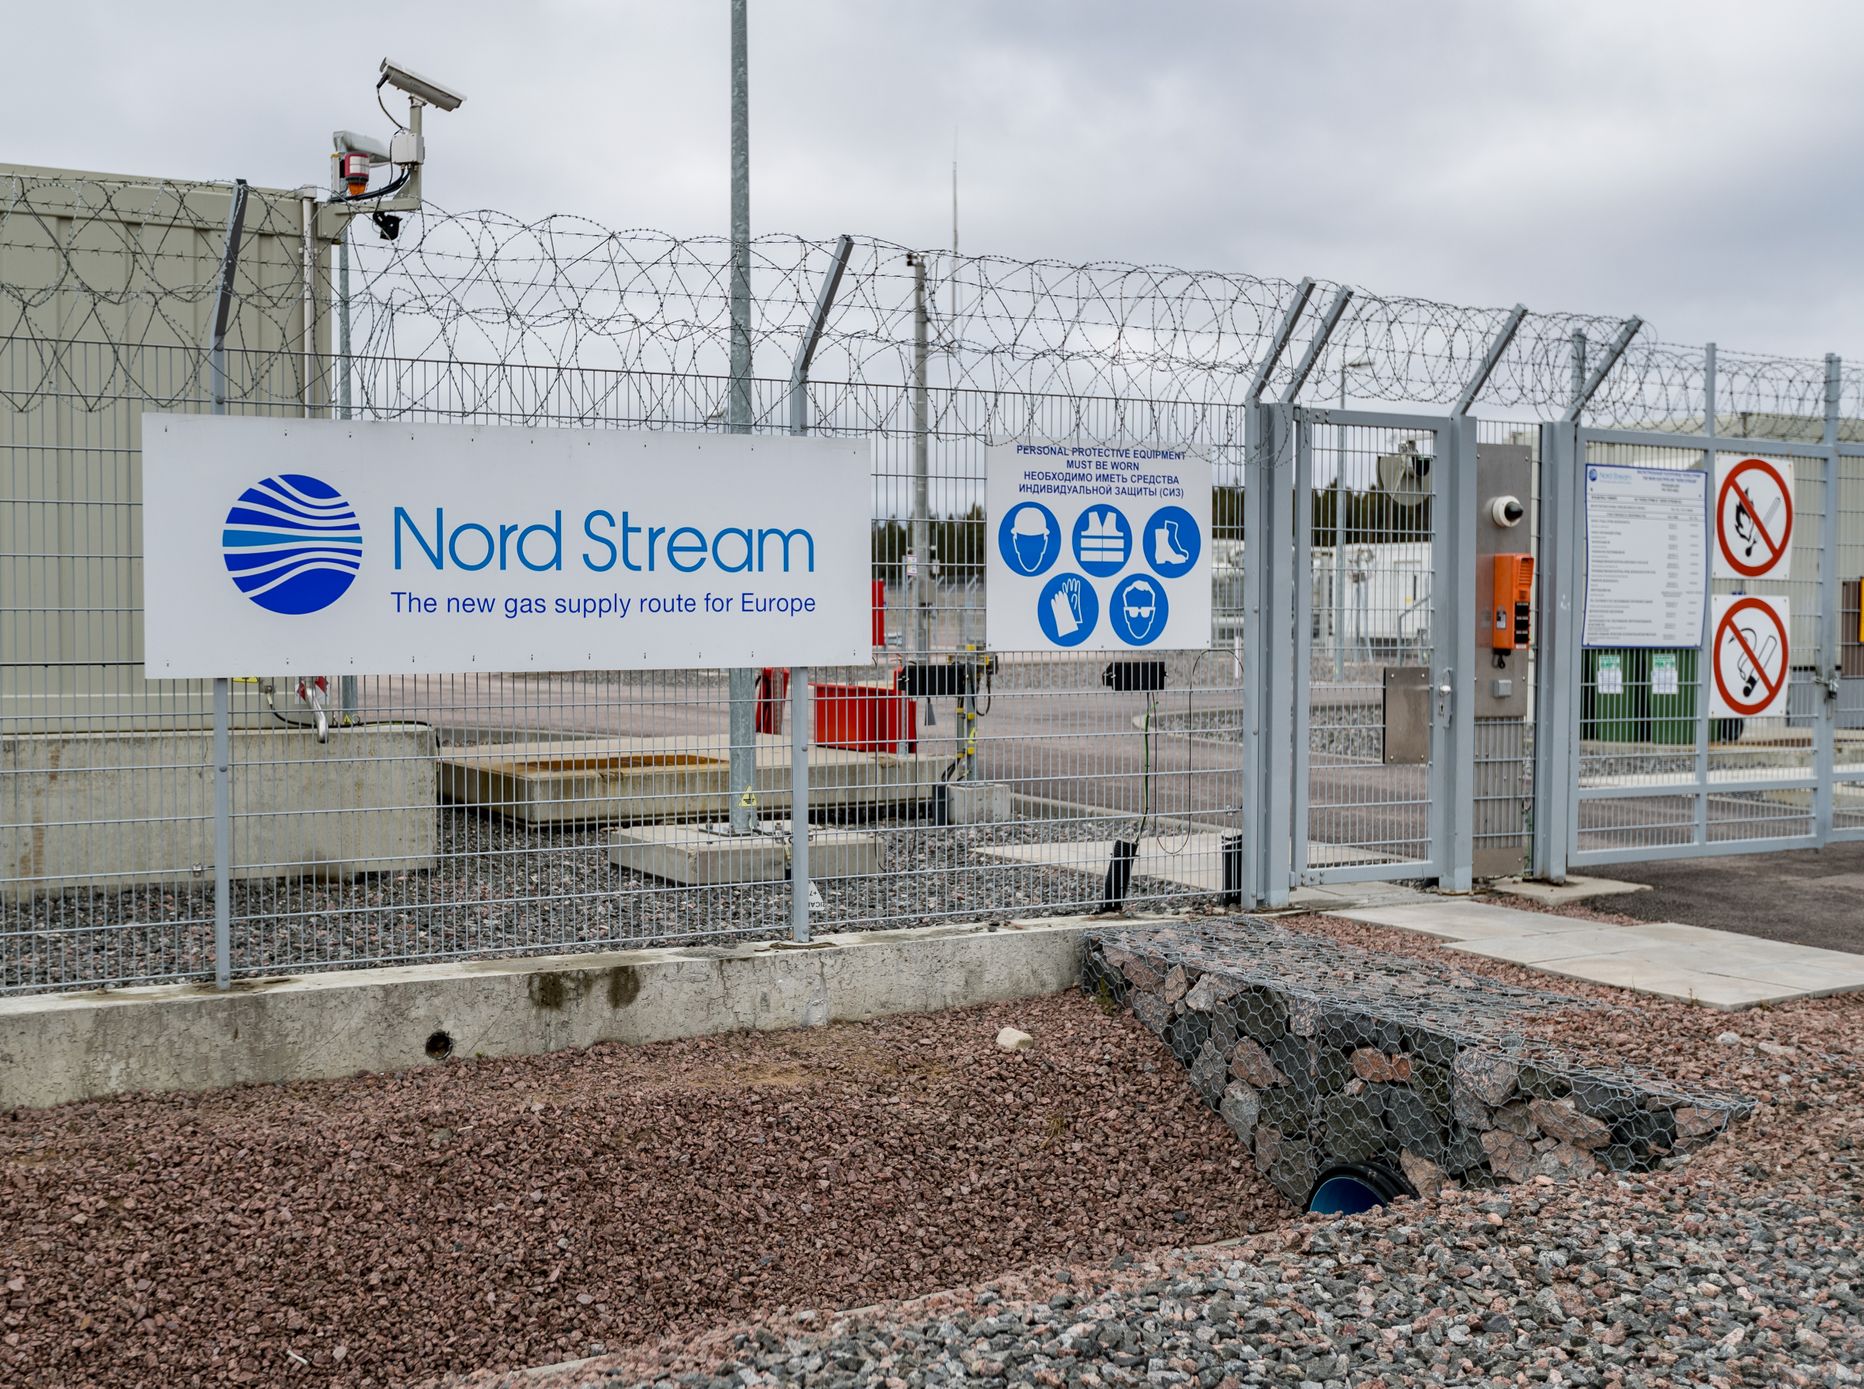 Nord Streami Portovaja kompressorijaam, Portovaja, 06.04.2017
Portovaja kompressorijaam. Sissepääs, värav, aed.
FOTO: MIHKEL MARIPUU/POSTIMEES